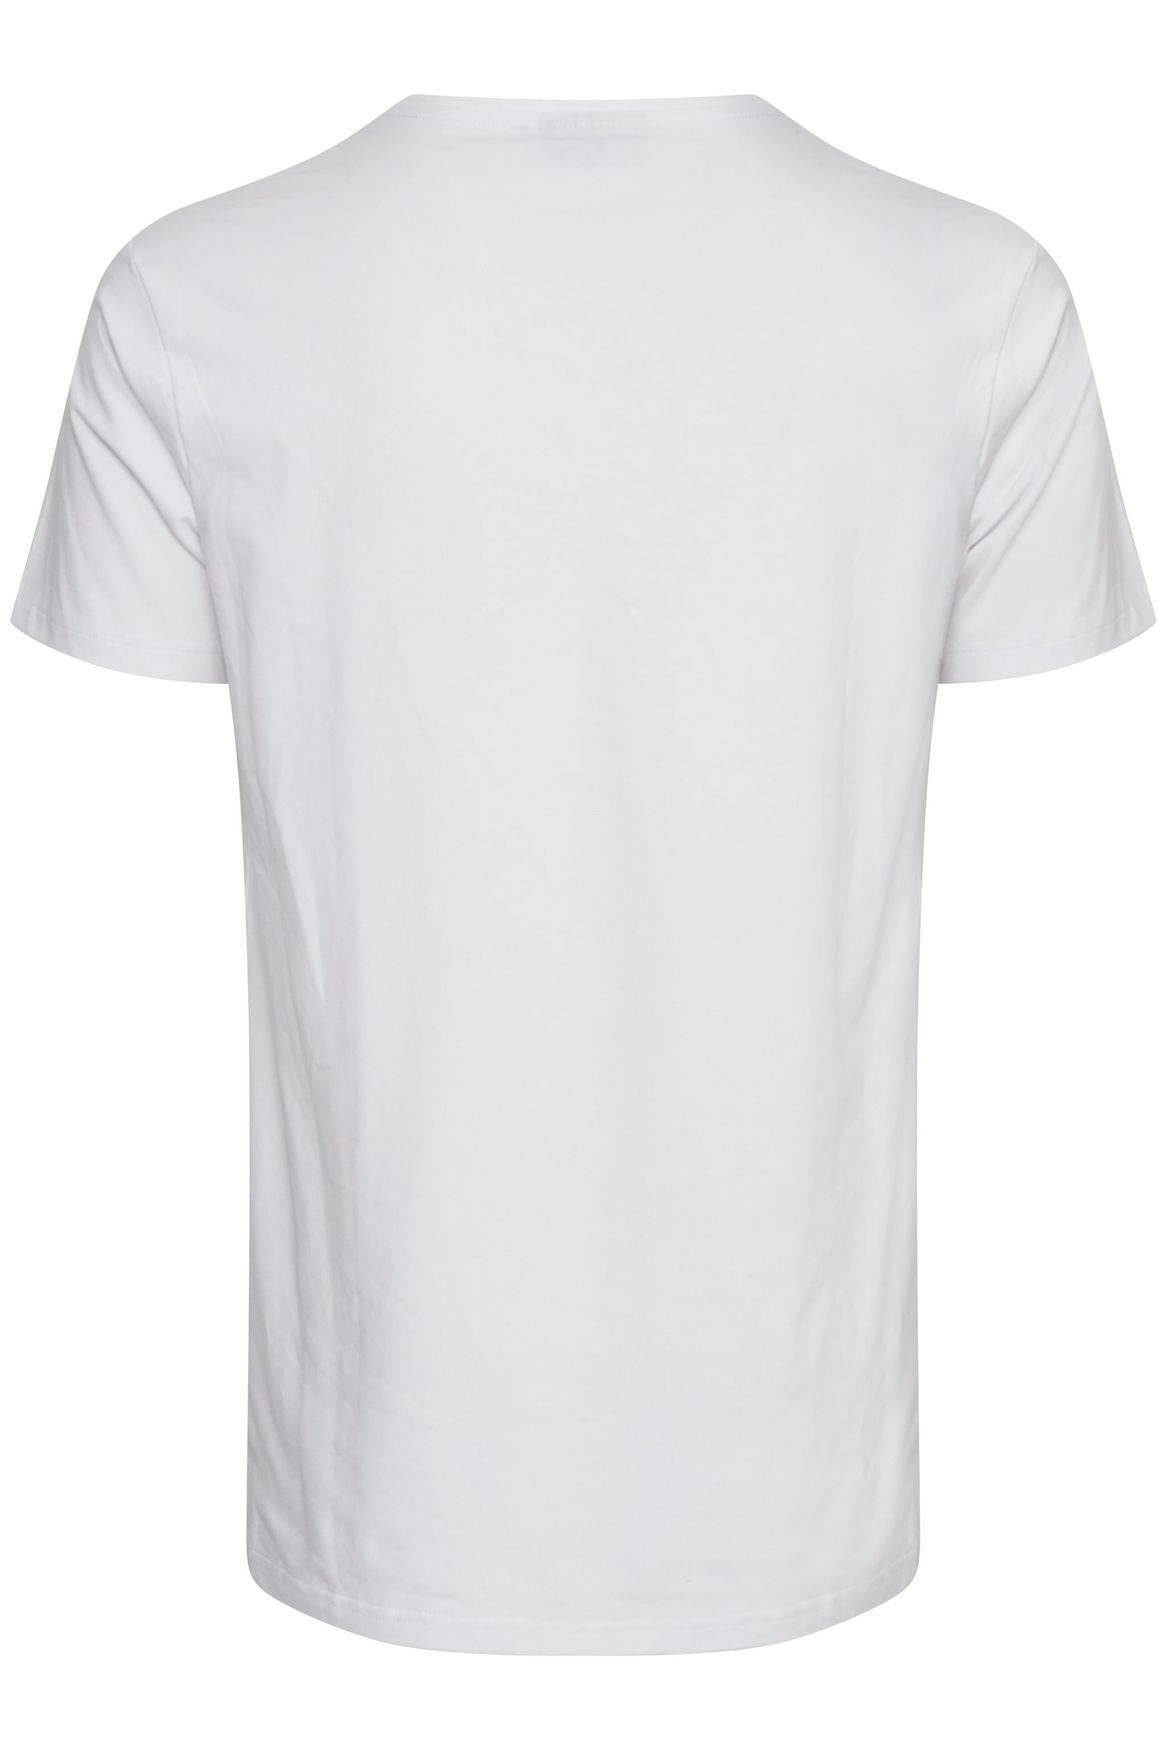 T-Shirt Weiß Kurzarm Einfarbiges Friday in T-Shirt V-Ausschnitt Casual LINCOLN 4458 Basic